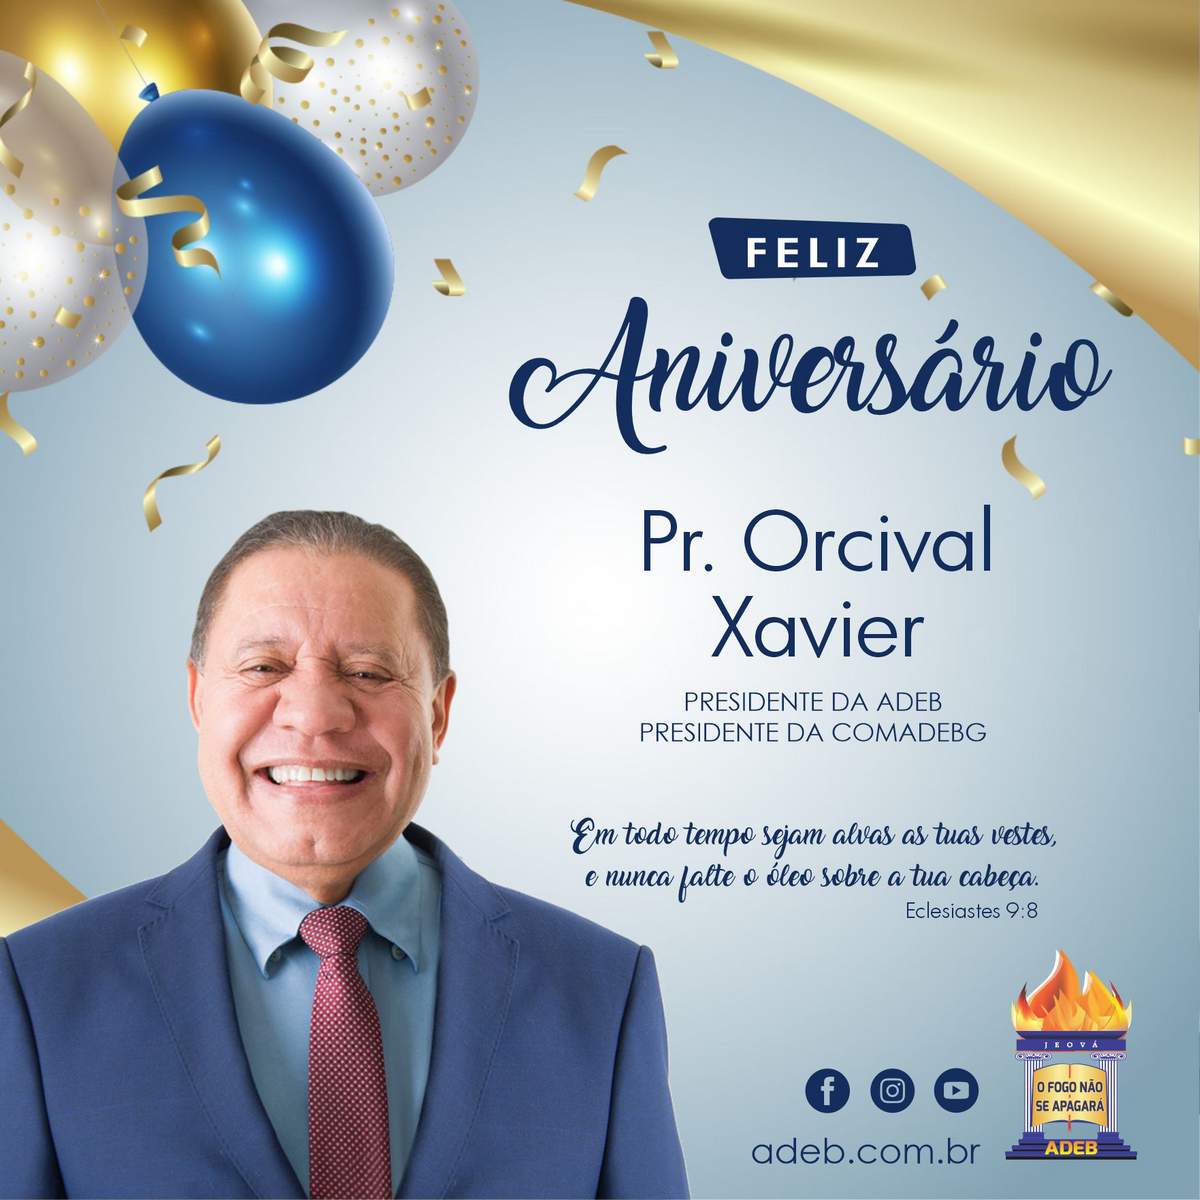 Feliz Aniversário, Pr. Orcival Xavier!